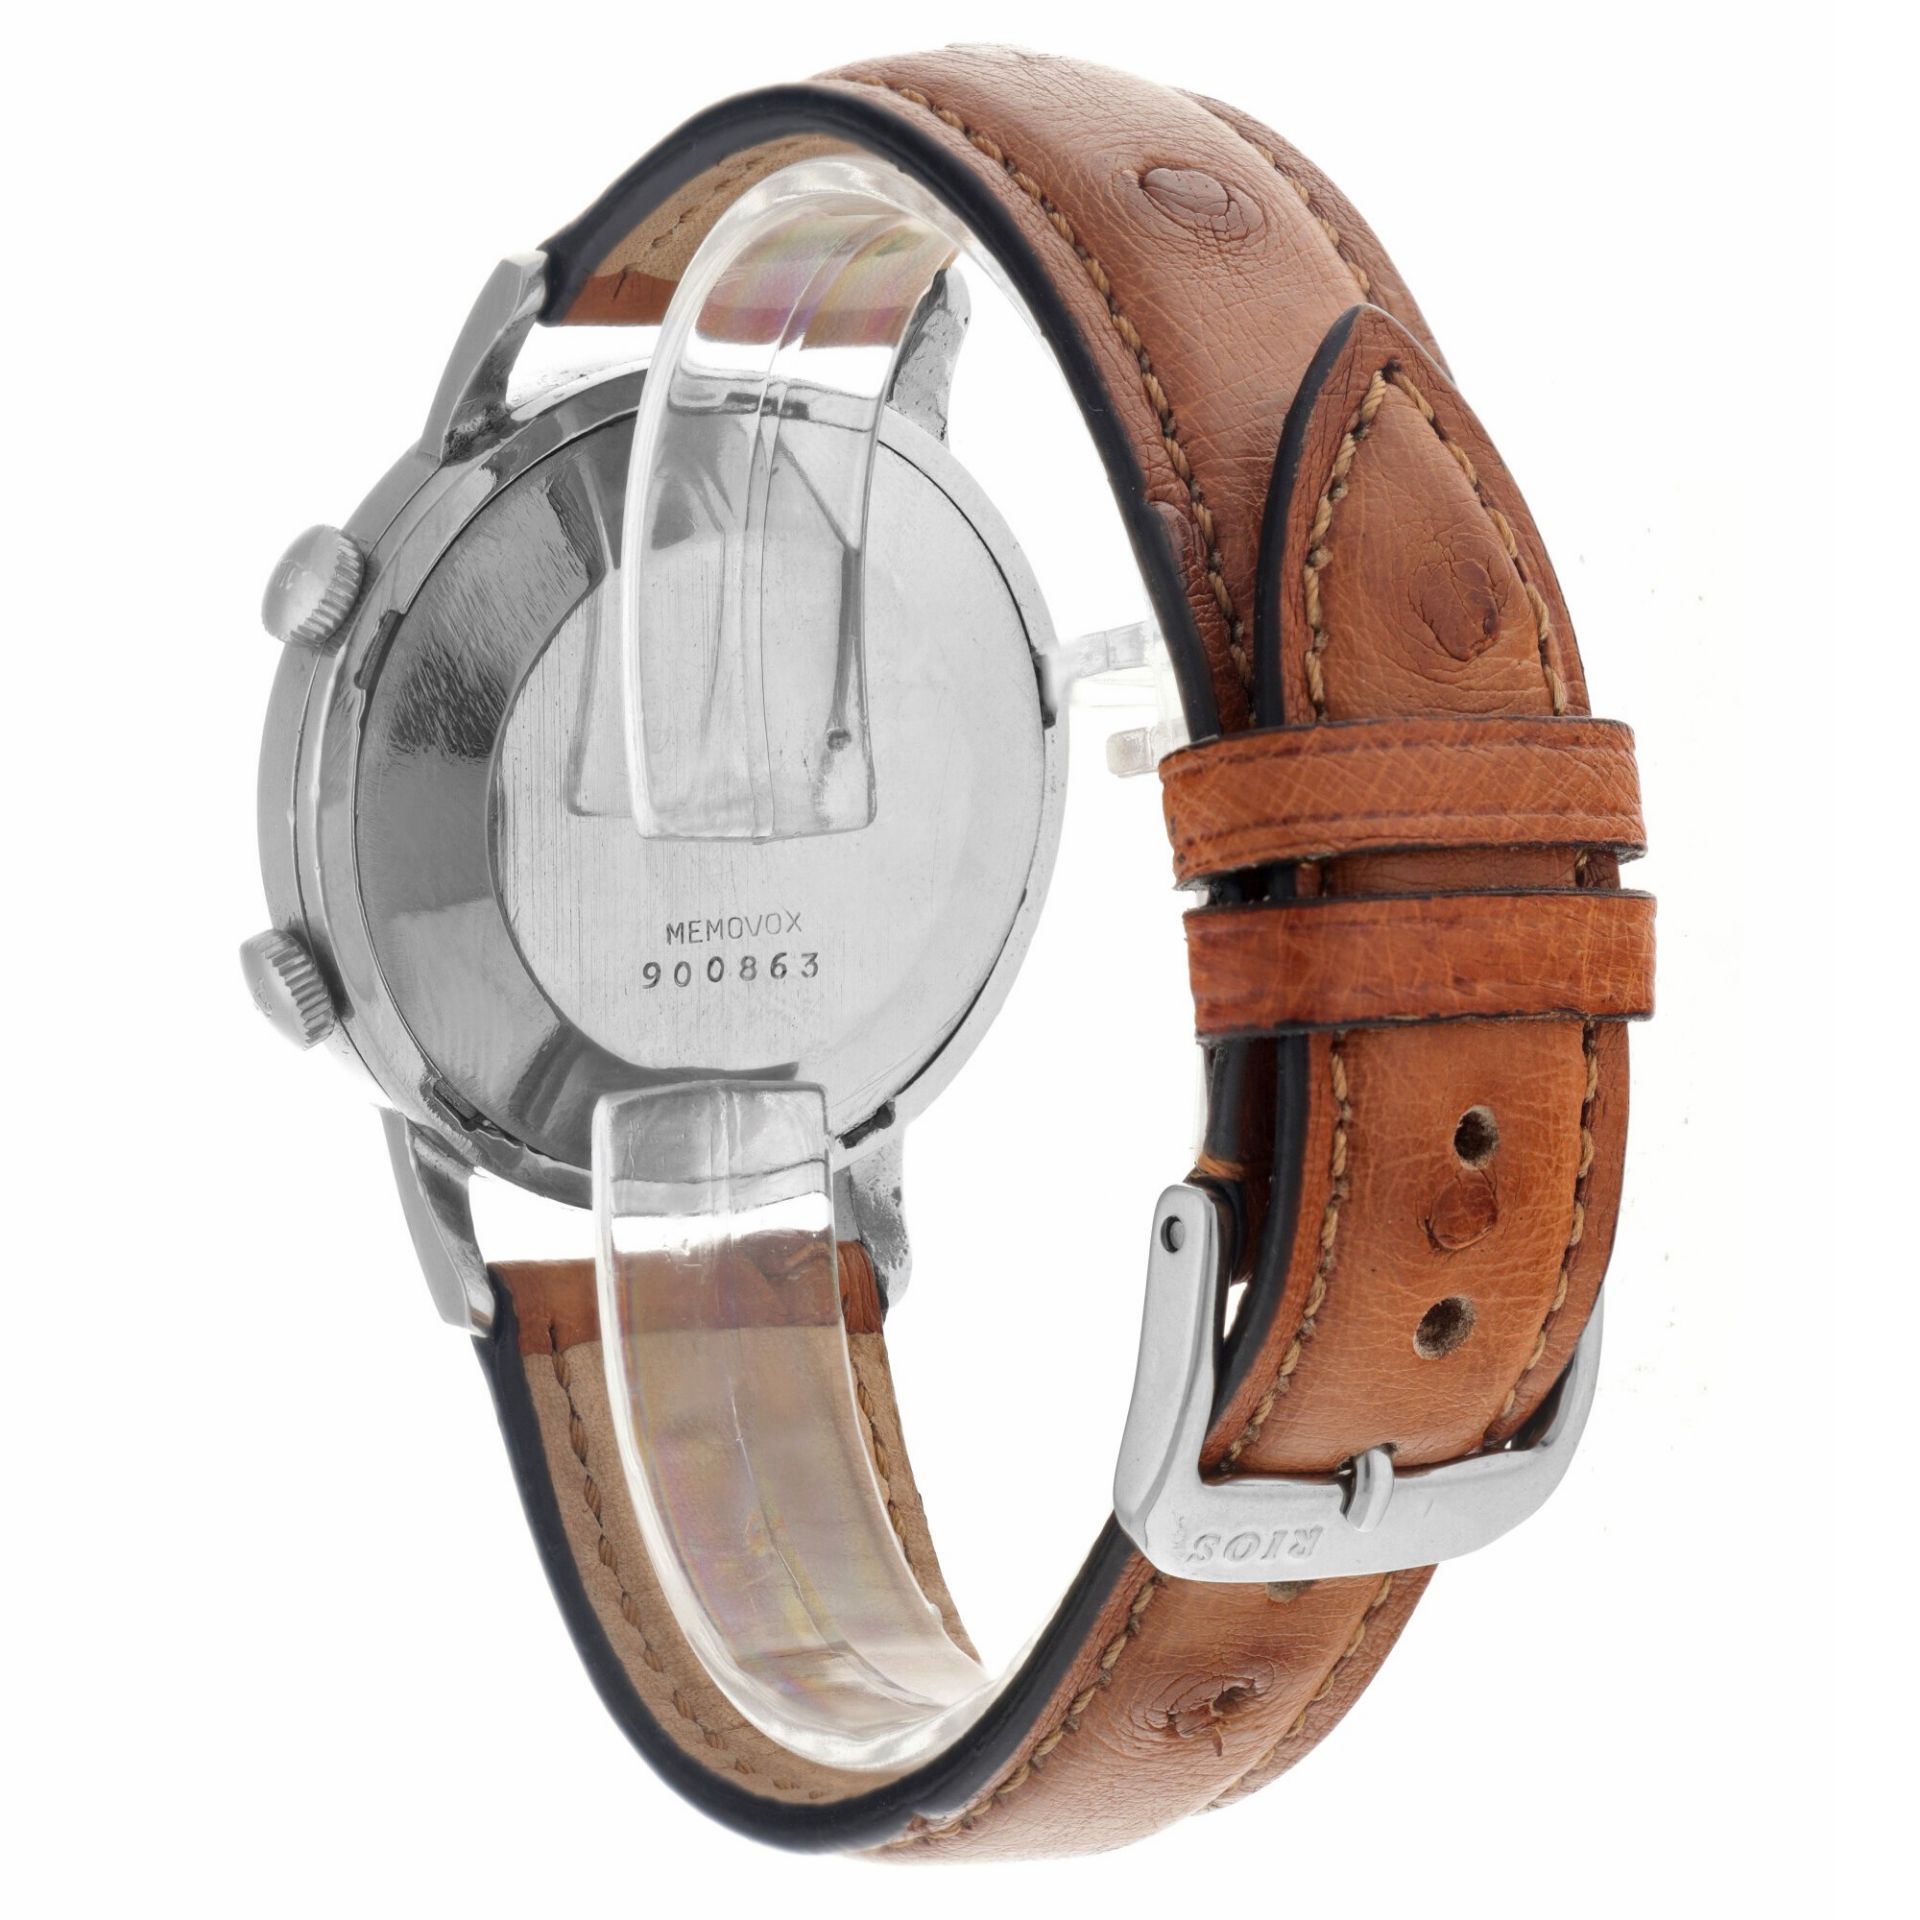 Jaeger-LeCoultre Memovox Automatic - Men's wristwatch. - Image 3 of 5